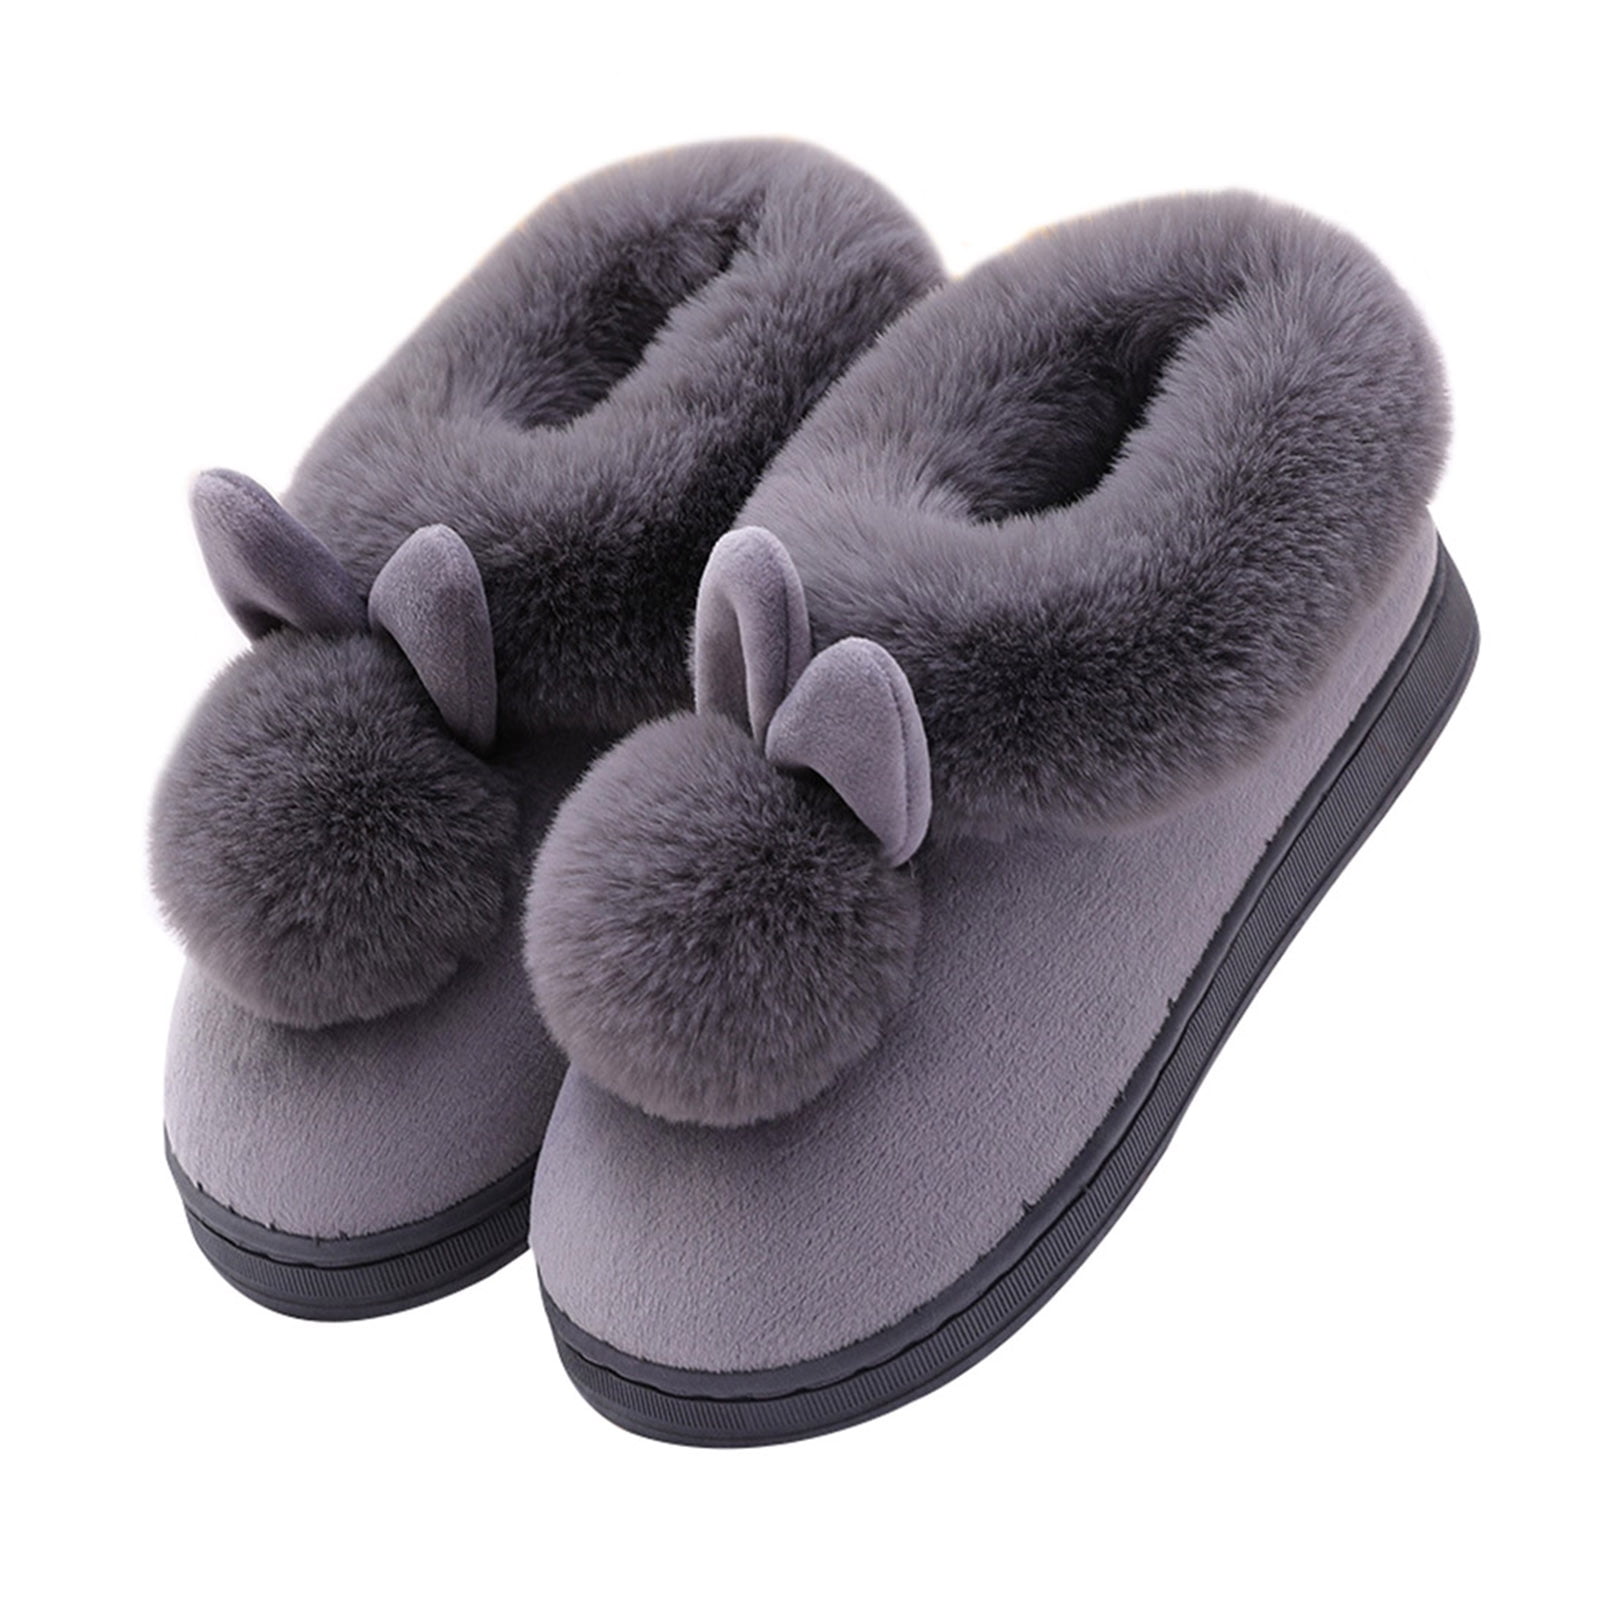 Girls Soft Slippers Plush Bunny Shaped Non-Slip Grey Christmas Gift for Winter 